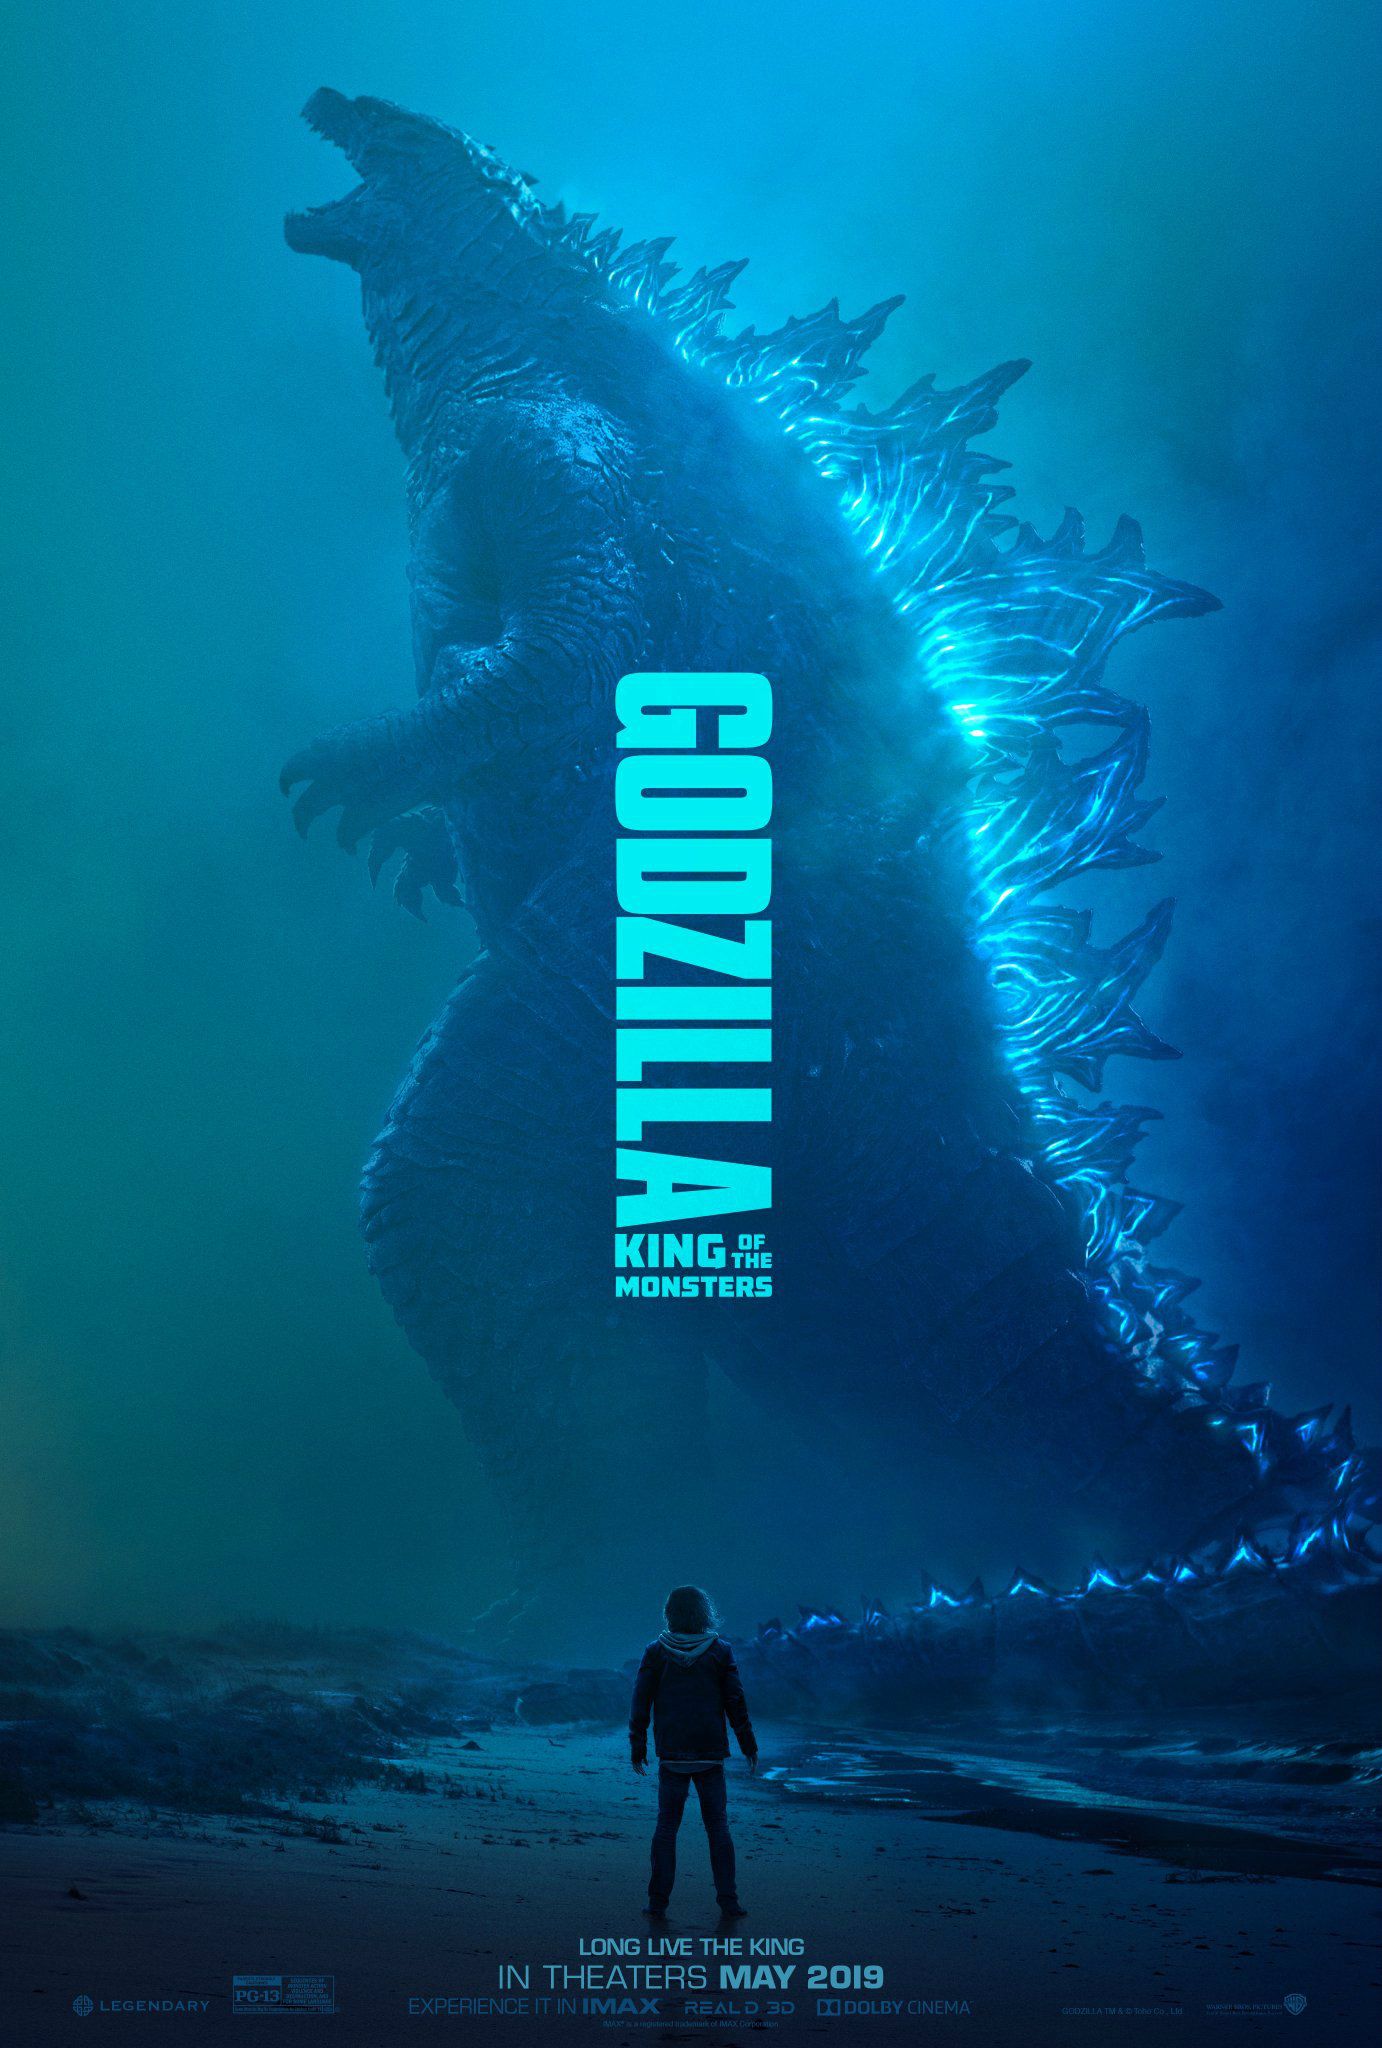 Godzilla & Ghidorah Brawl In King Of The Monsters Promo